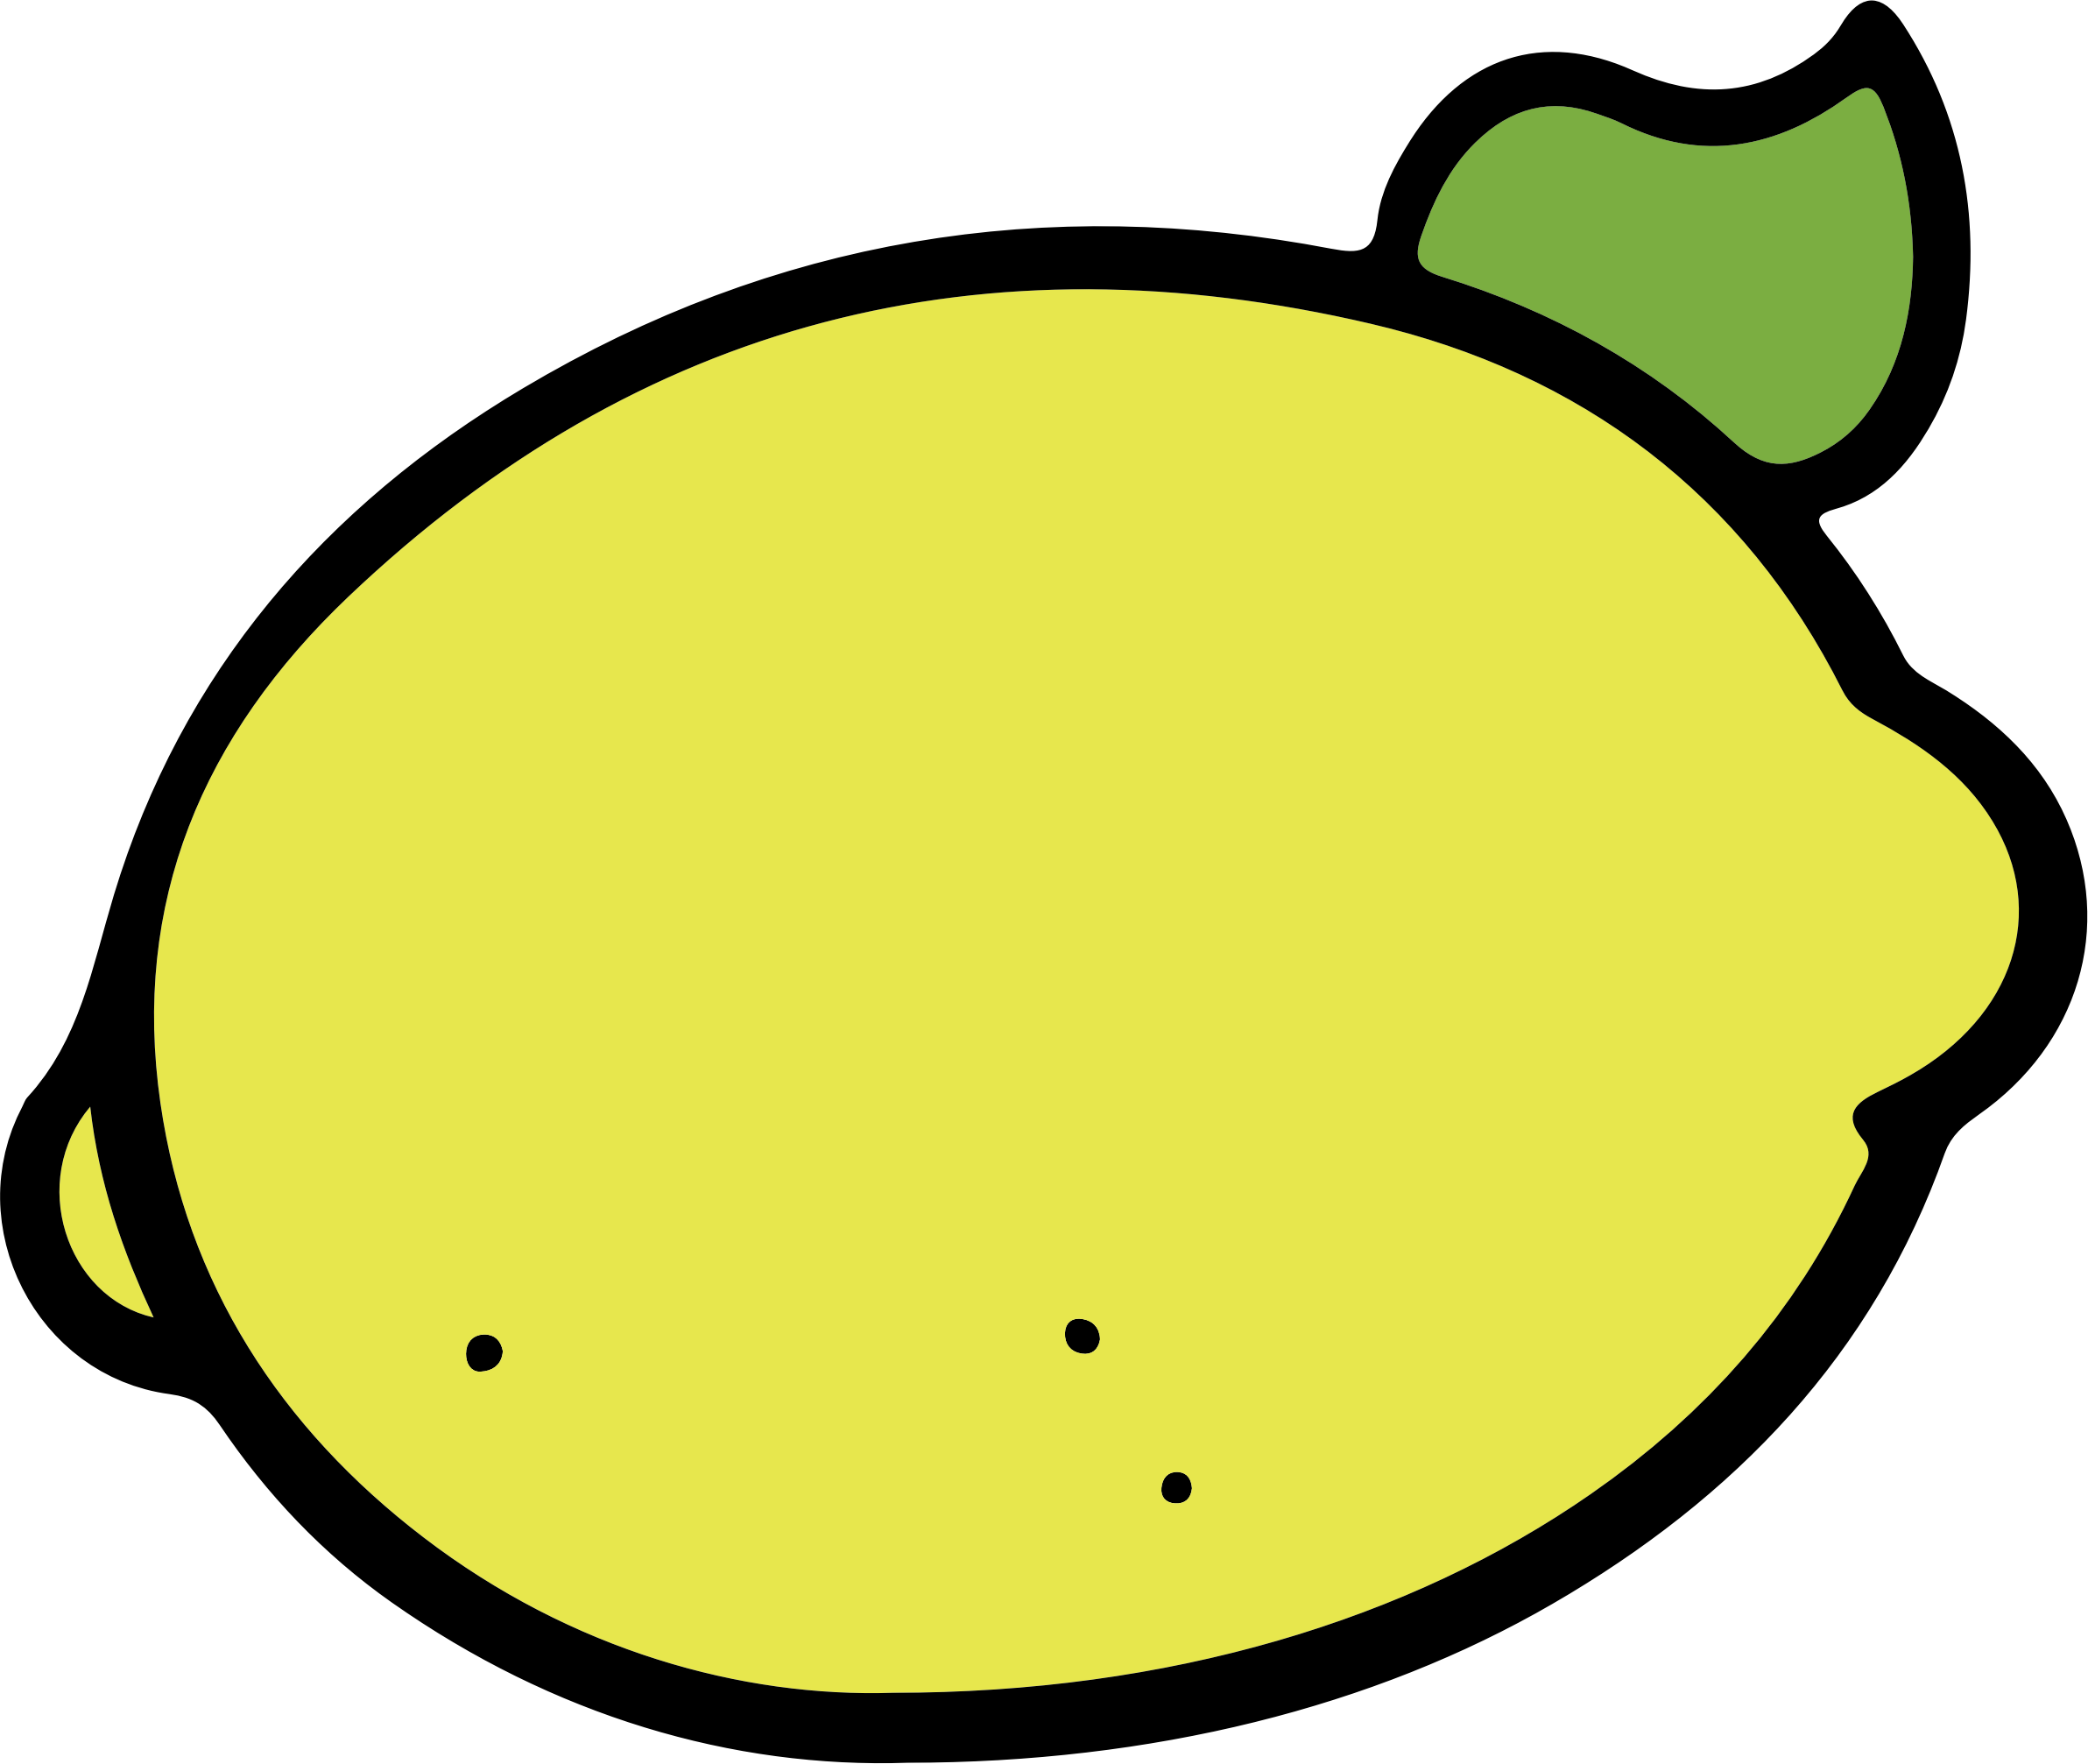 Lemon slice clip art vectors download free vector art clipartcow